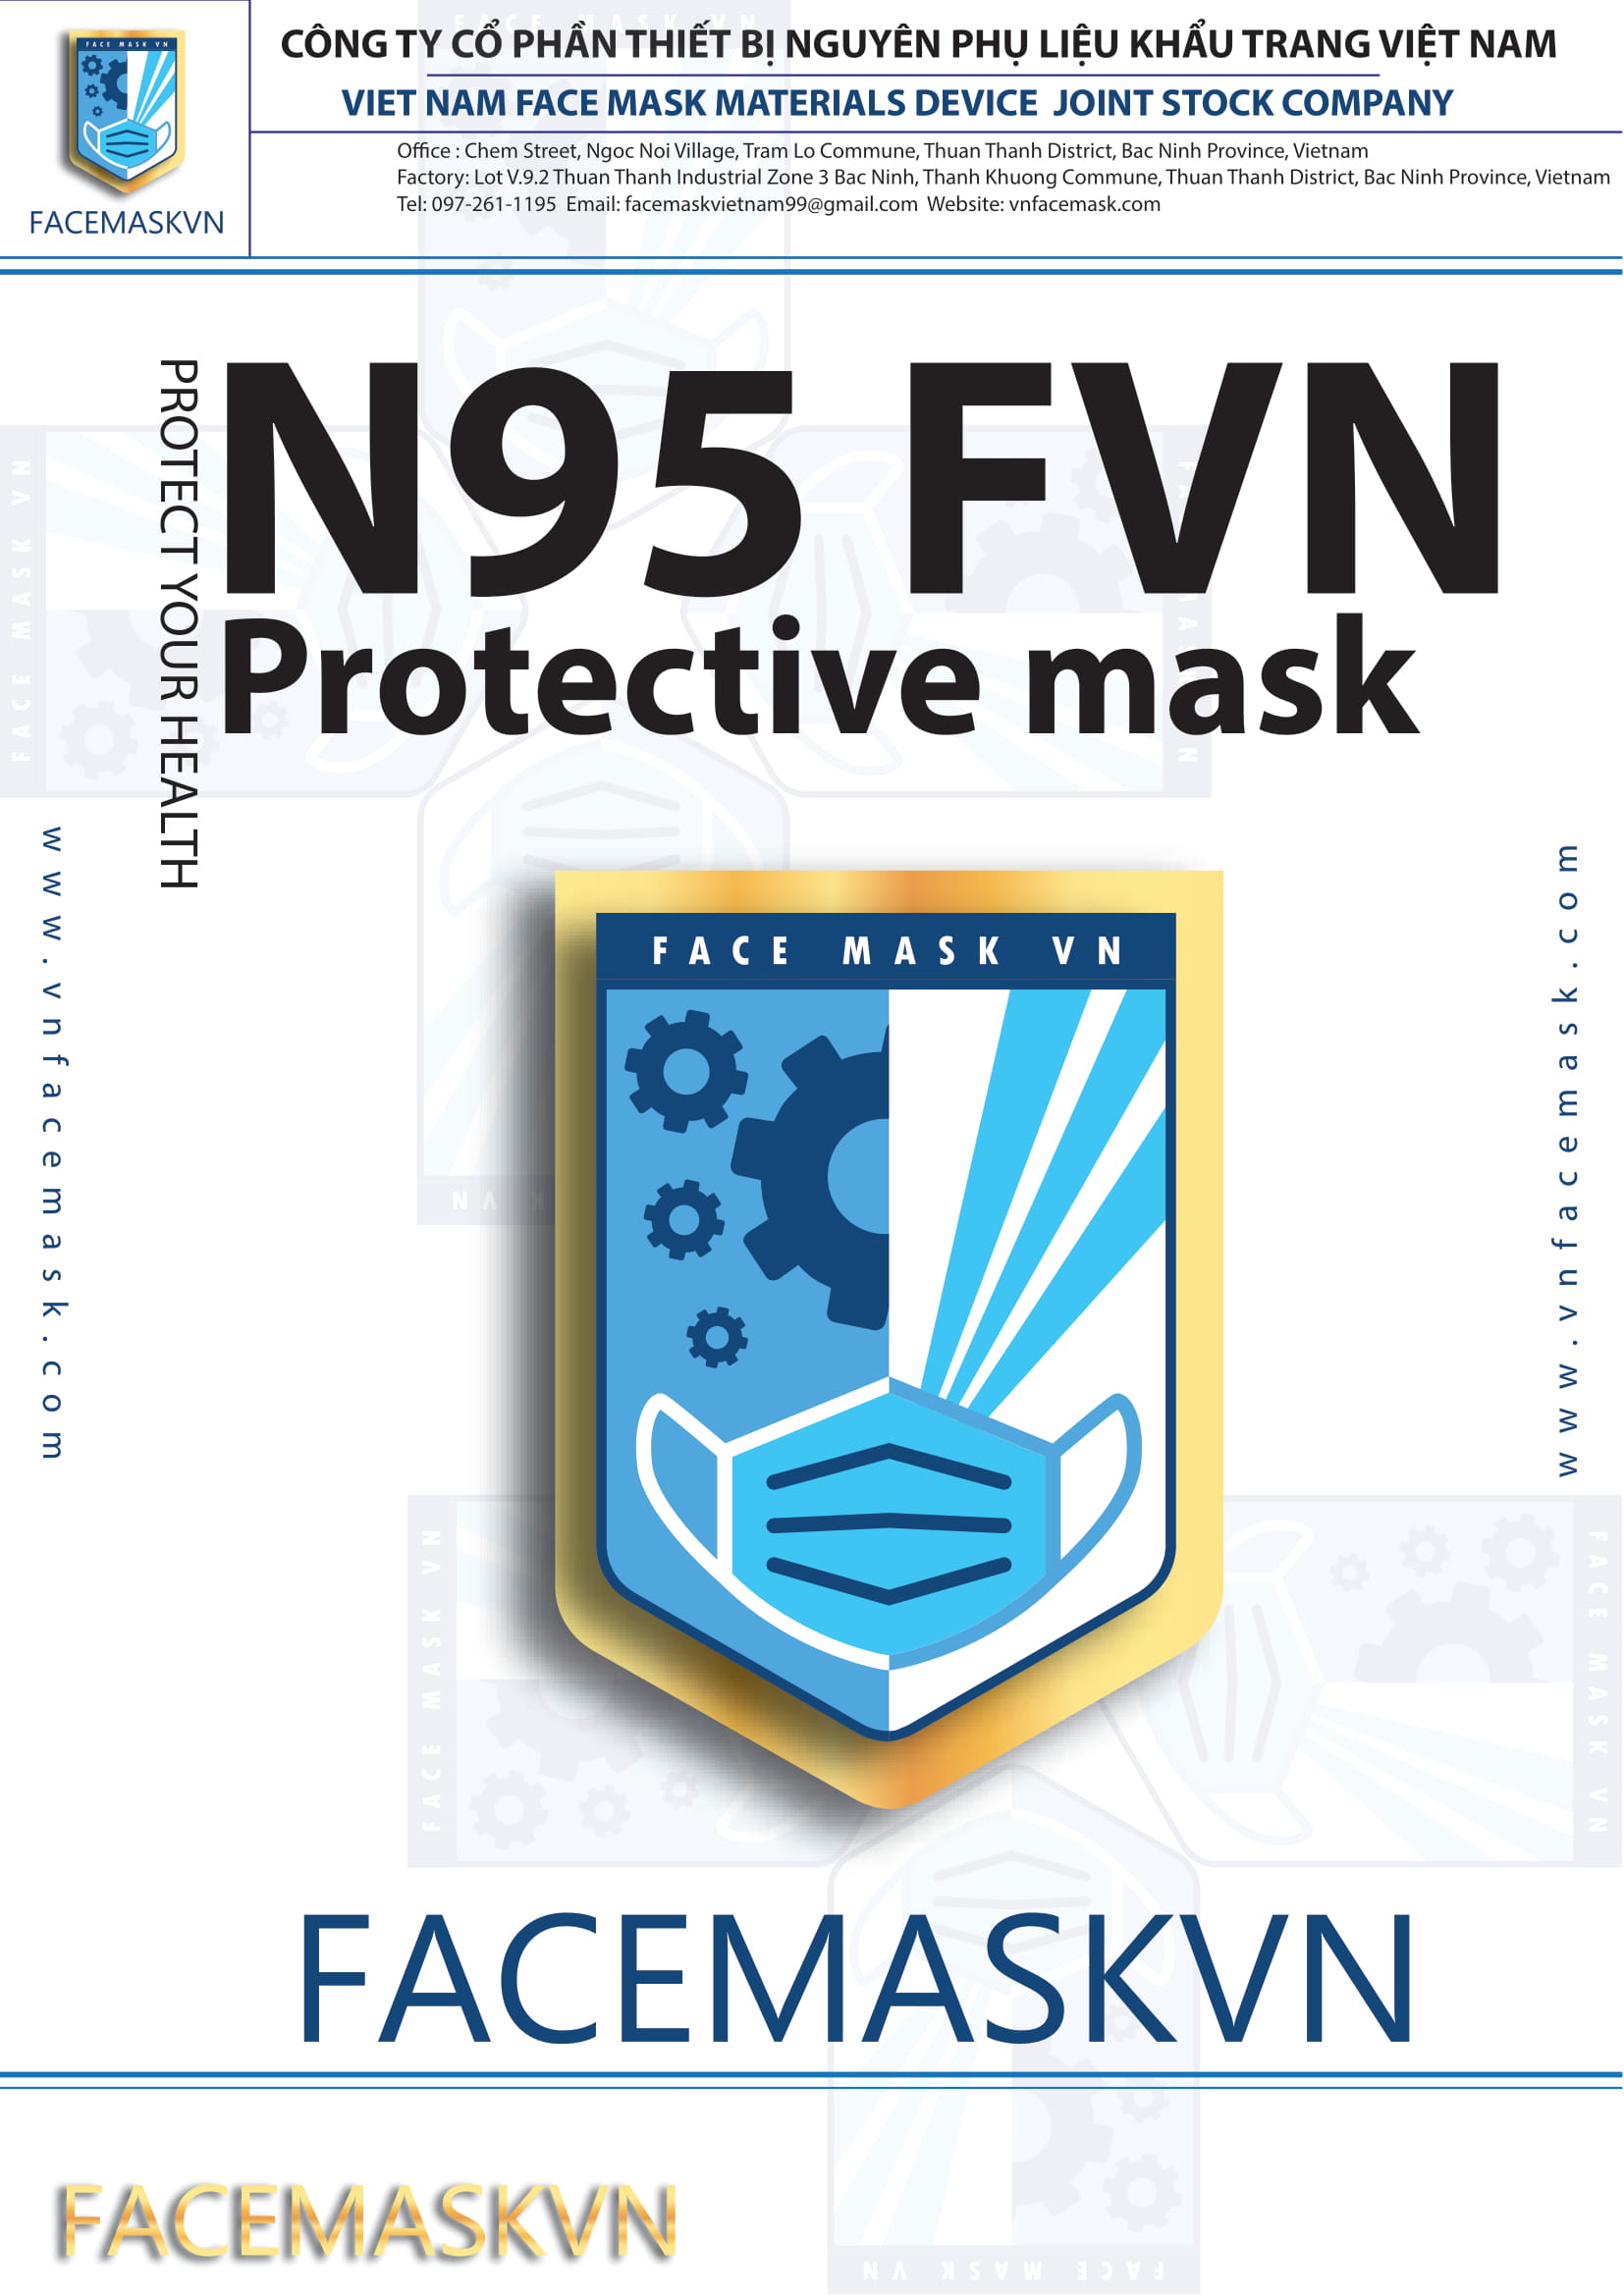 N95 FVN 22_compressed-17